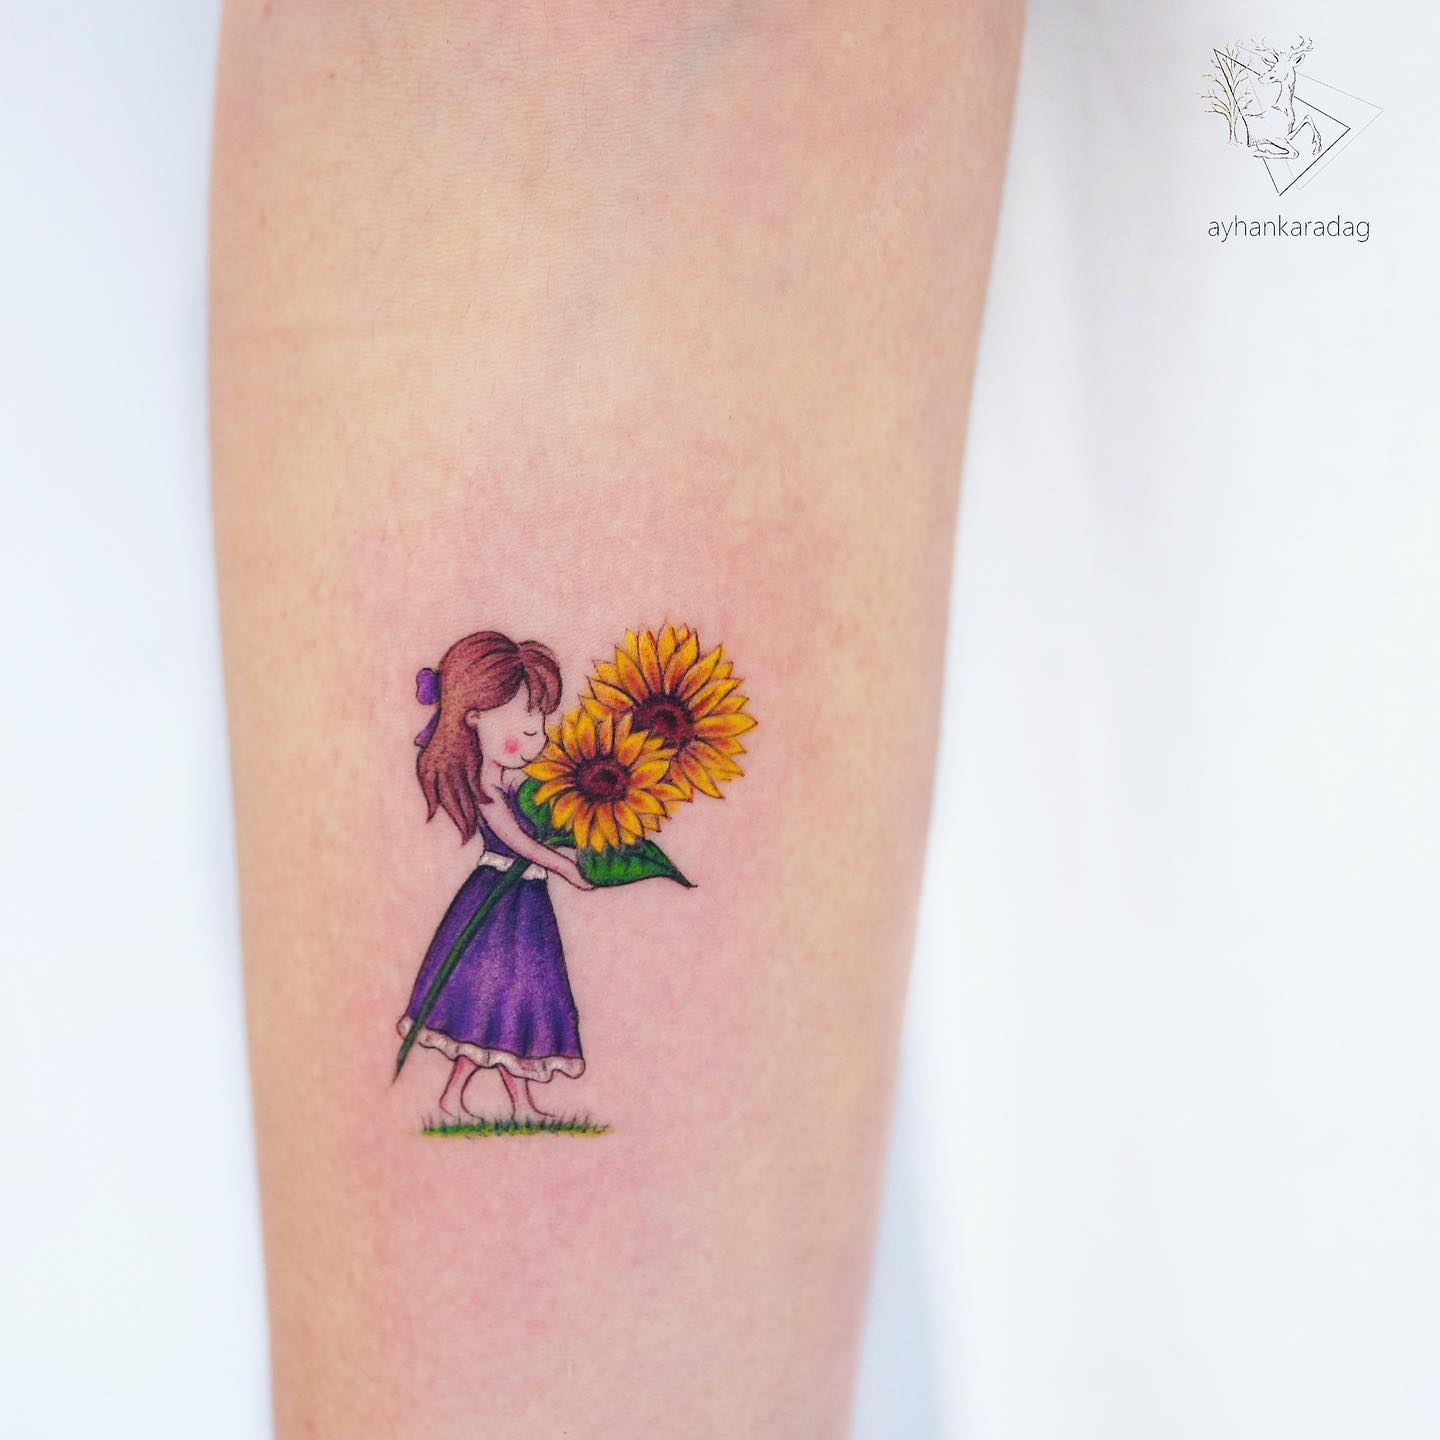 Sunflower tattoo on sleeve by ayhankrdg